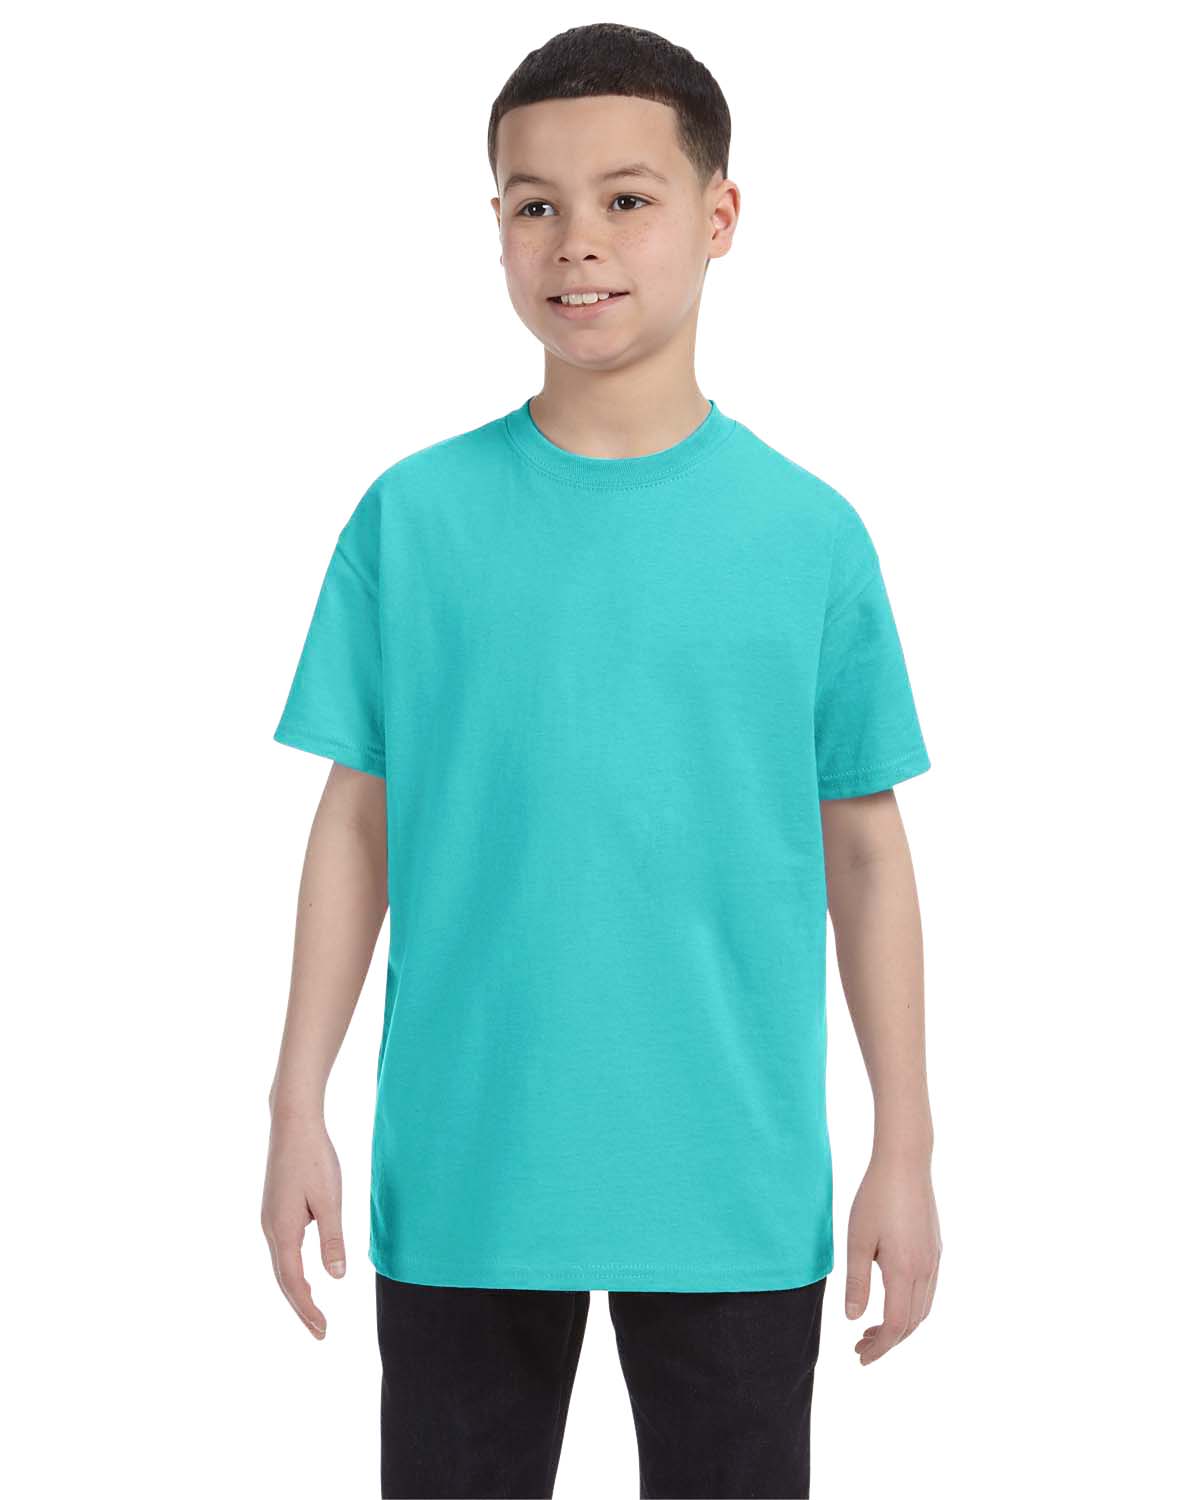 NPR Get Smarter Kids t-shirt by Chaser Brand National Public Radio Tee